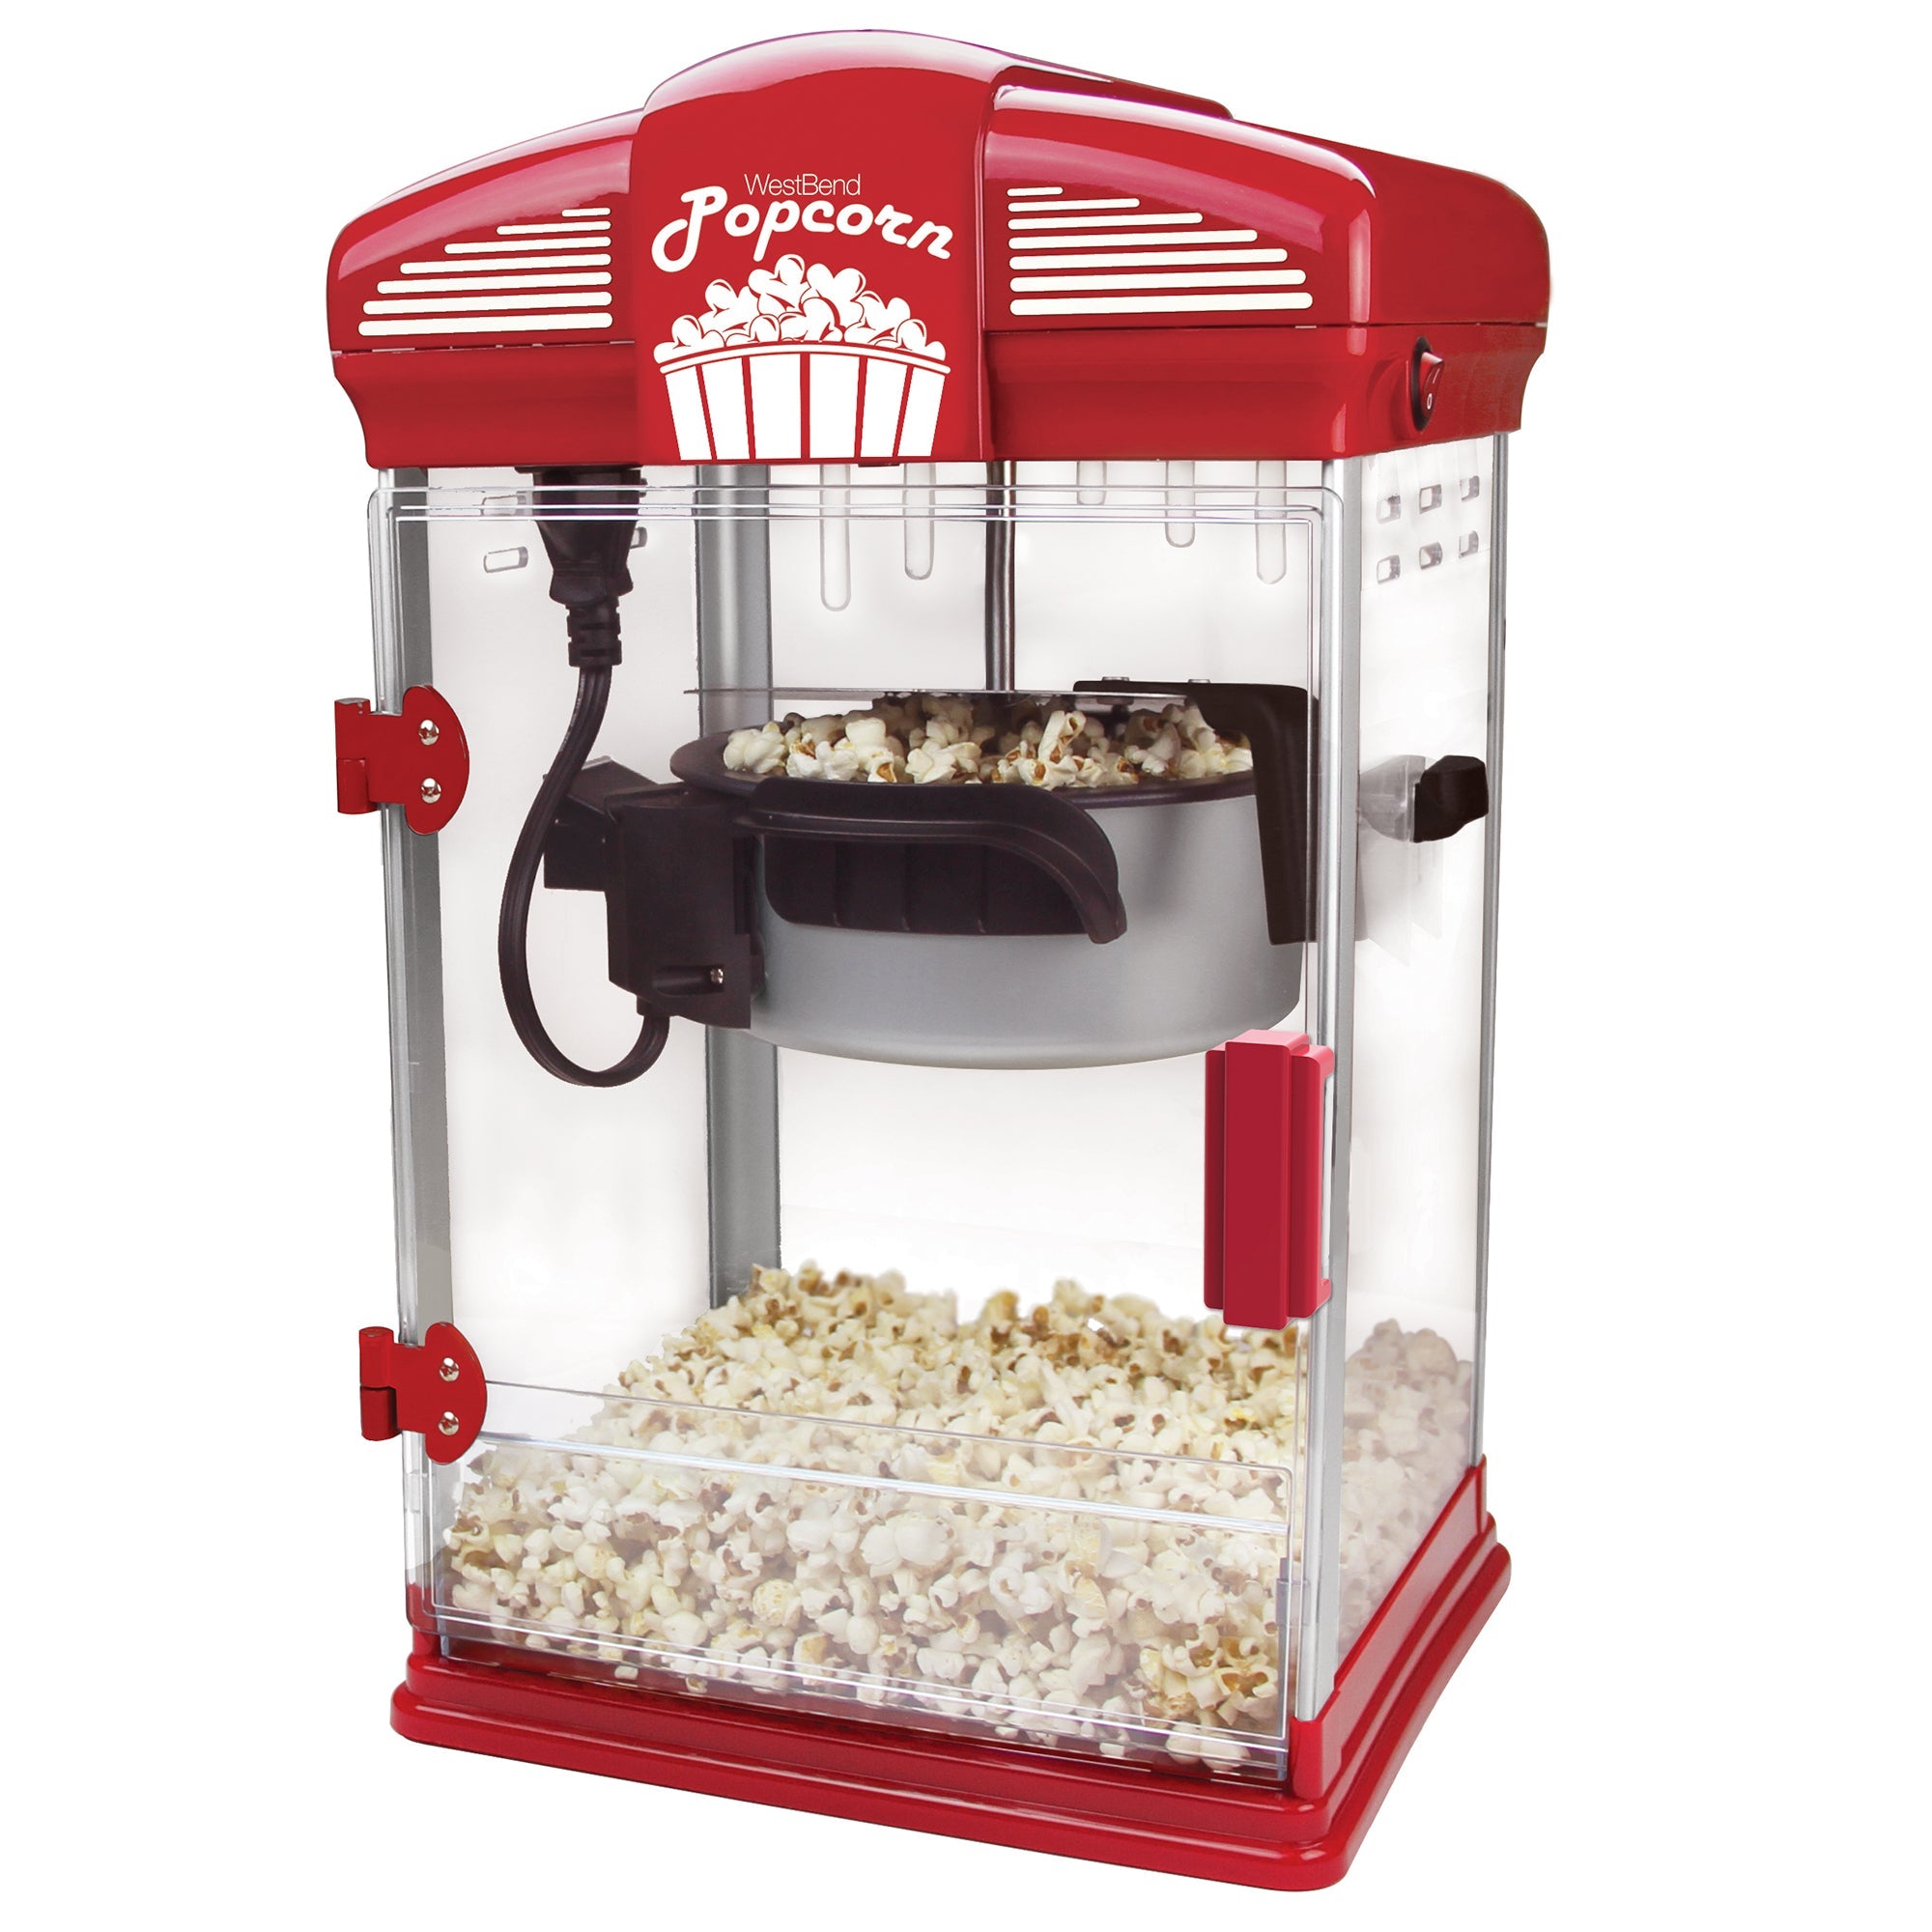 Tabletop Kettle Popcorn Maker